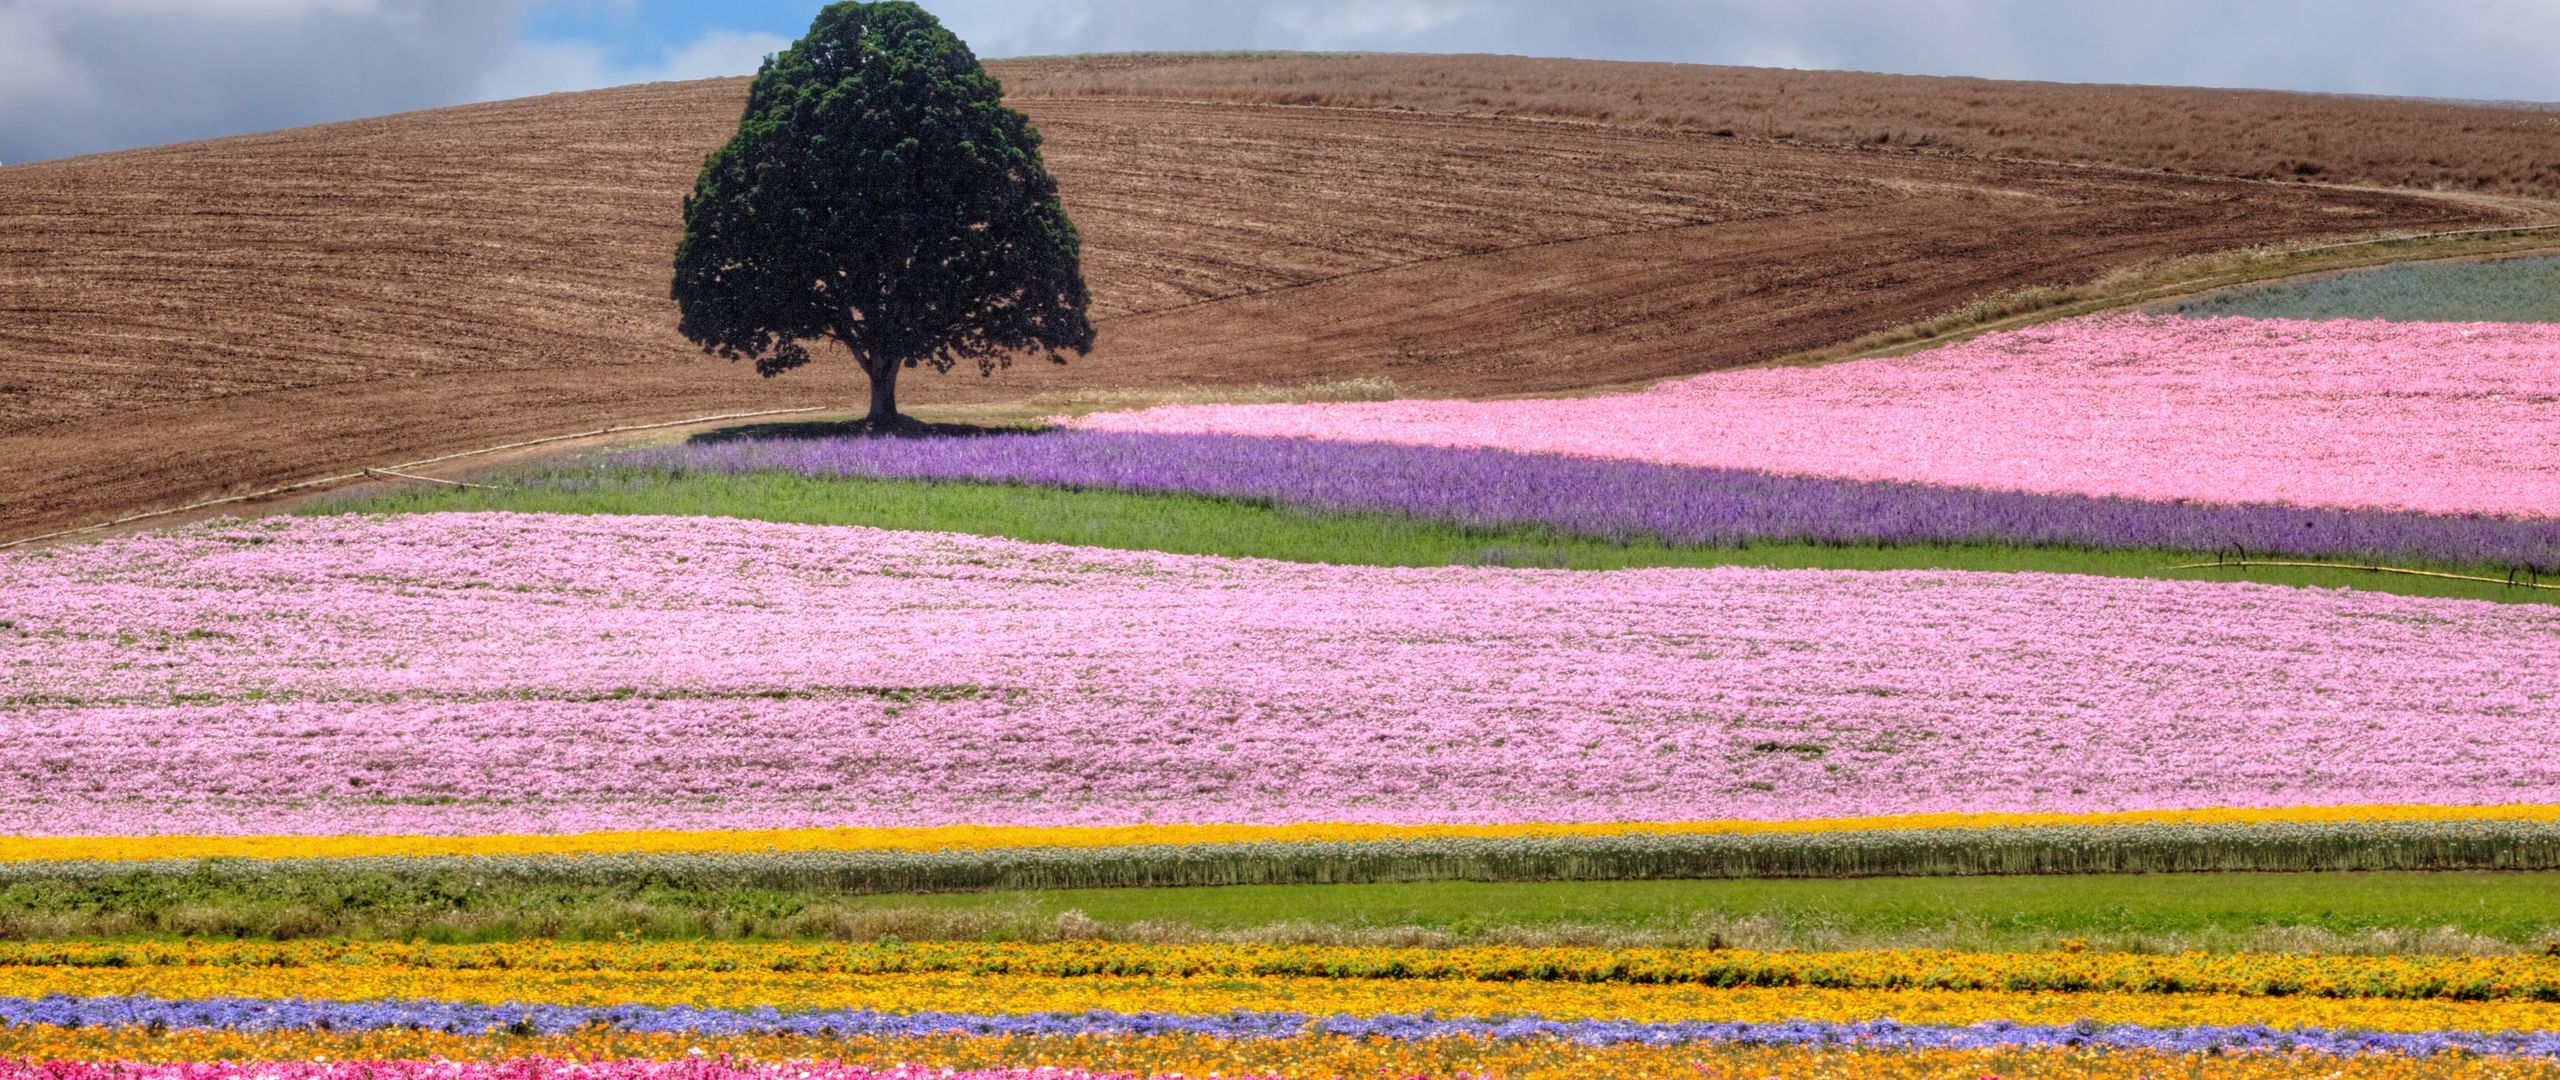 Download wallpaper 2560x1080 field, tree, flowers, colorful